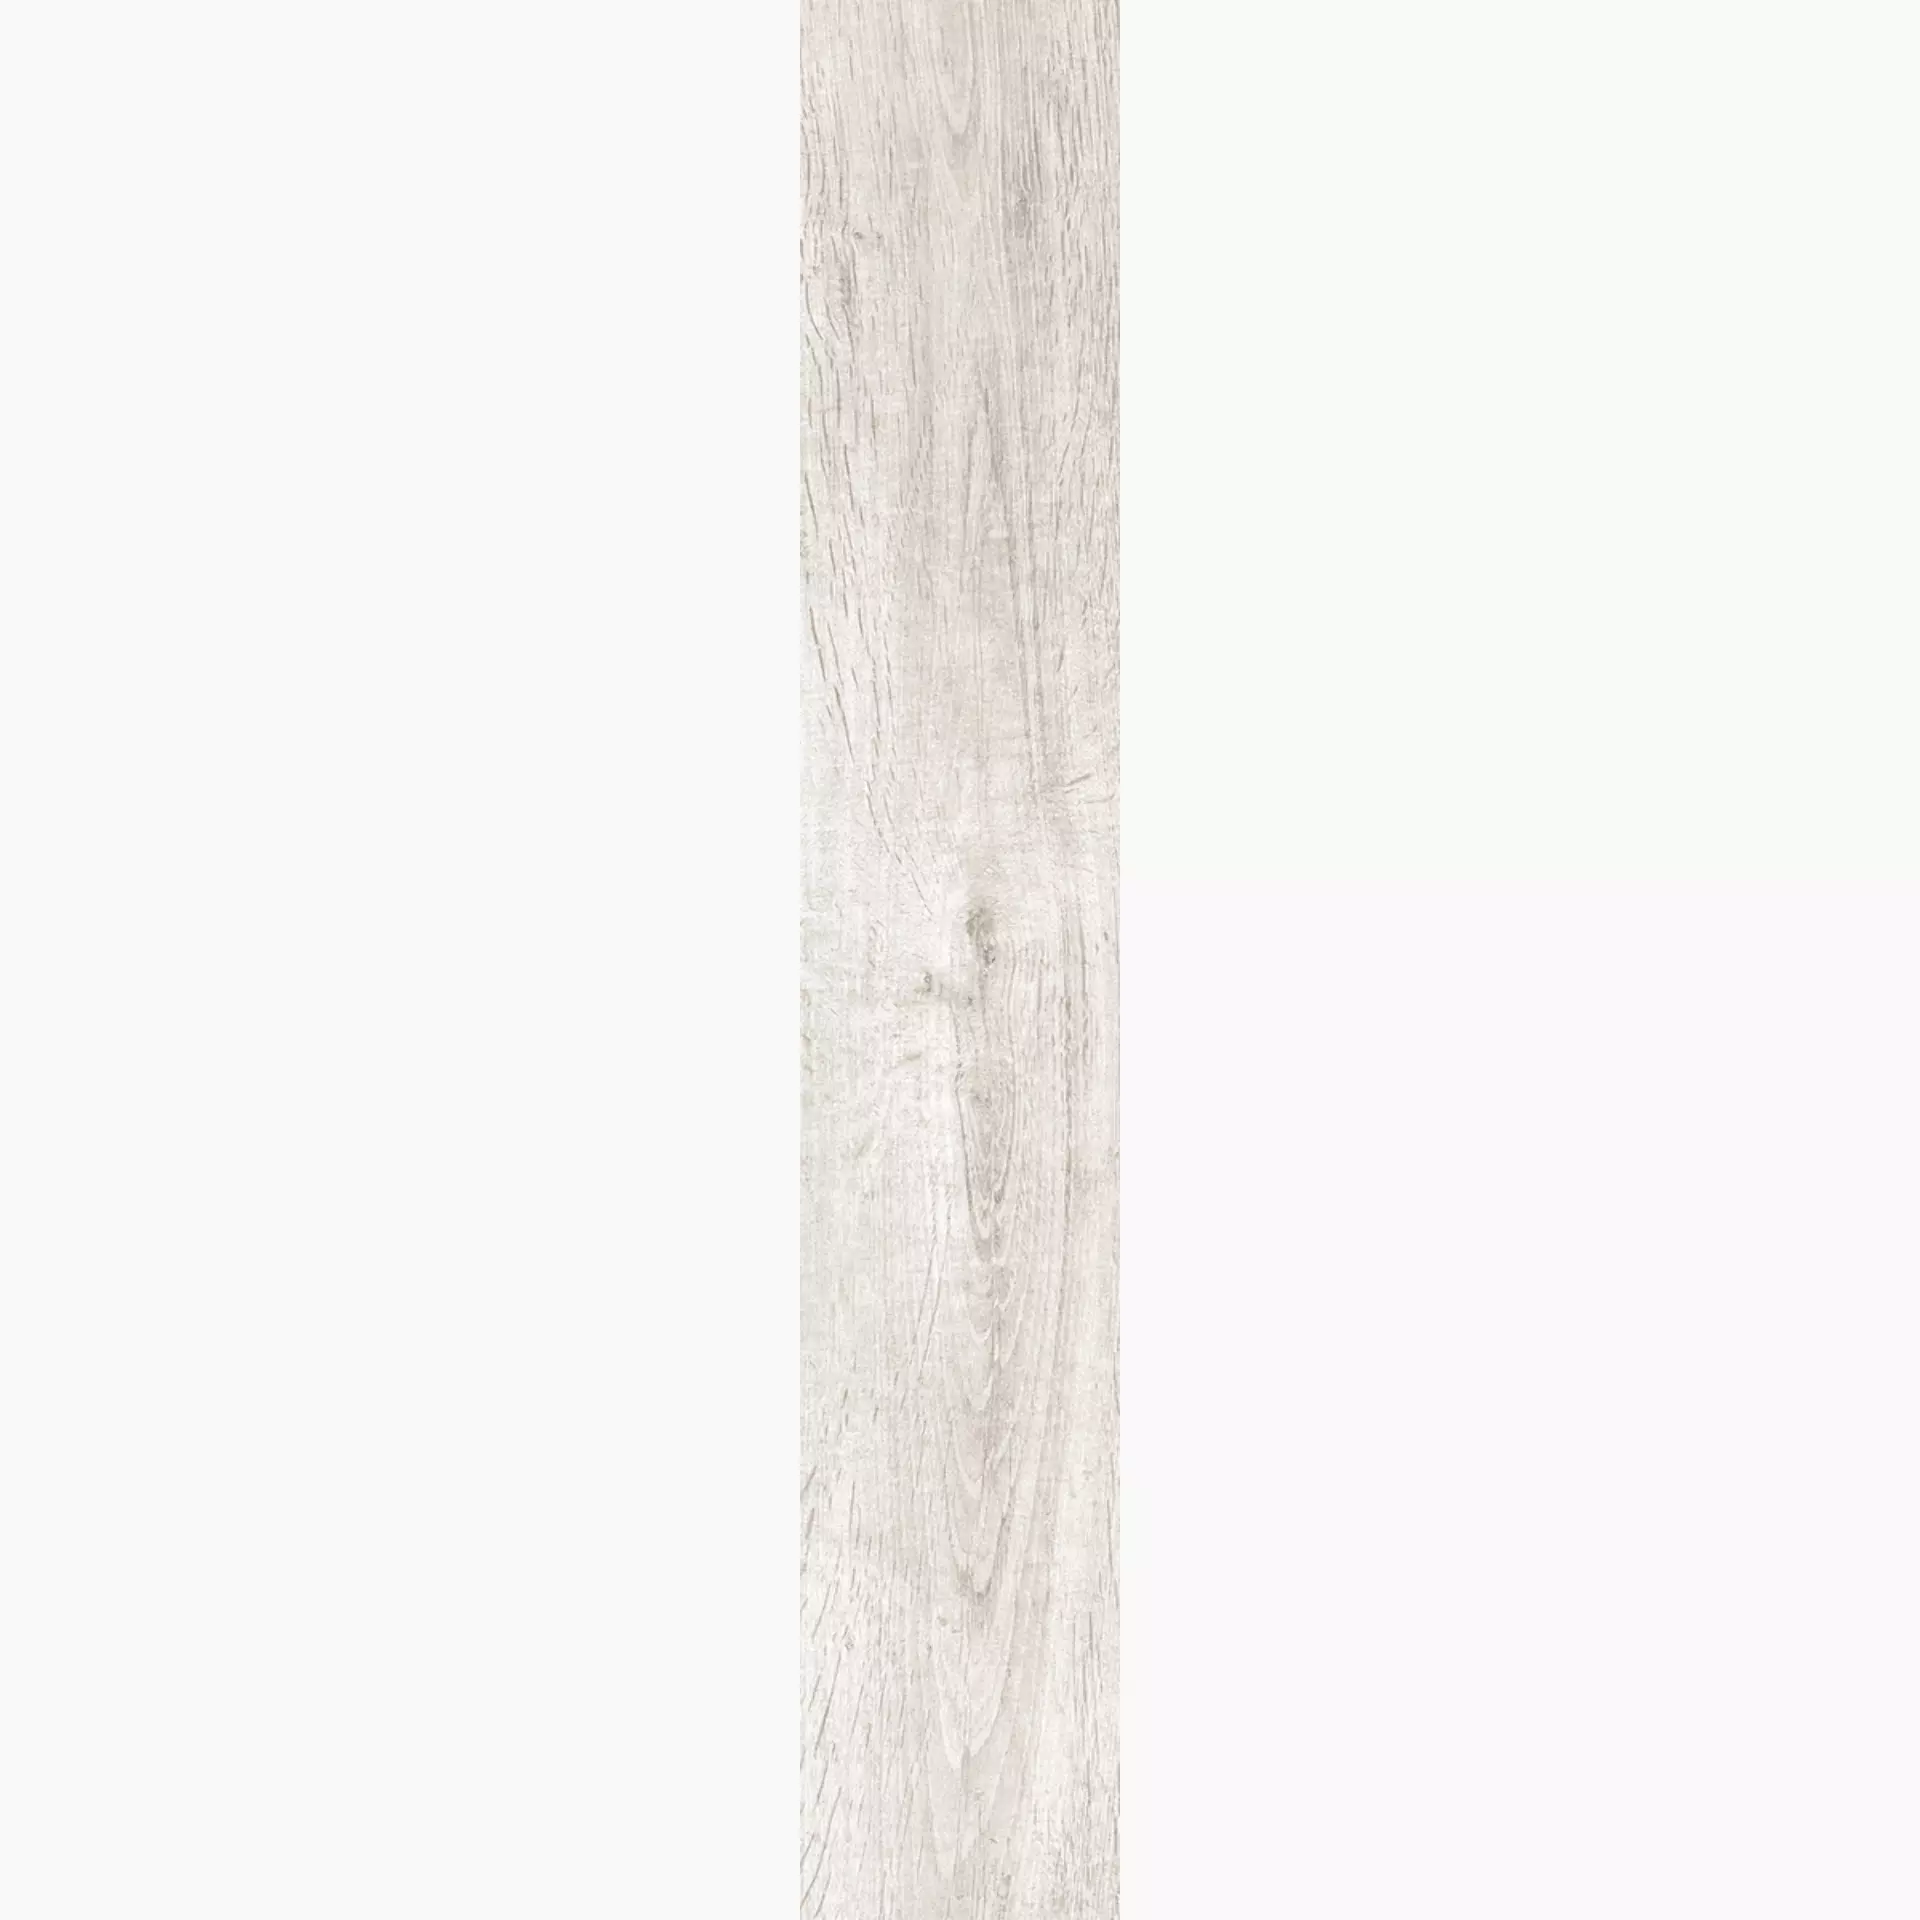 Rondine Greenwood Bianco Naturale J86460 7,5x45cm 8,5mm